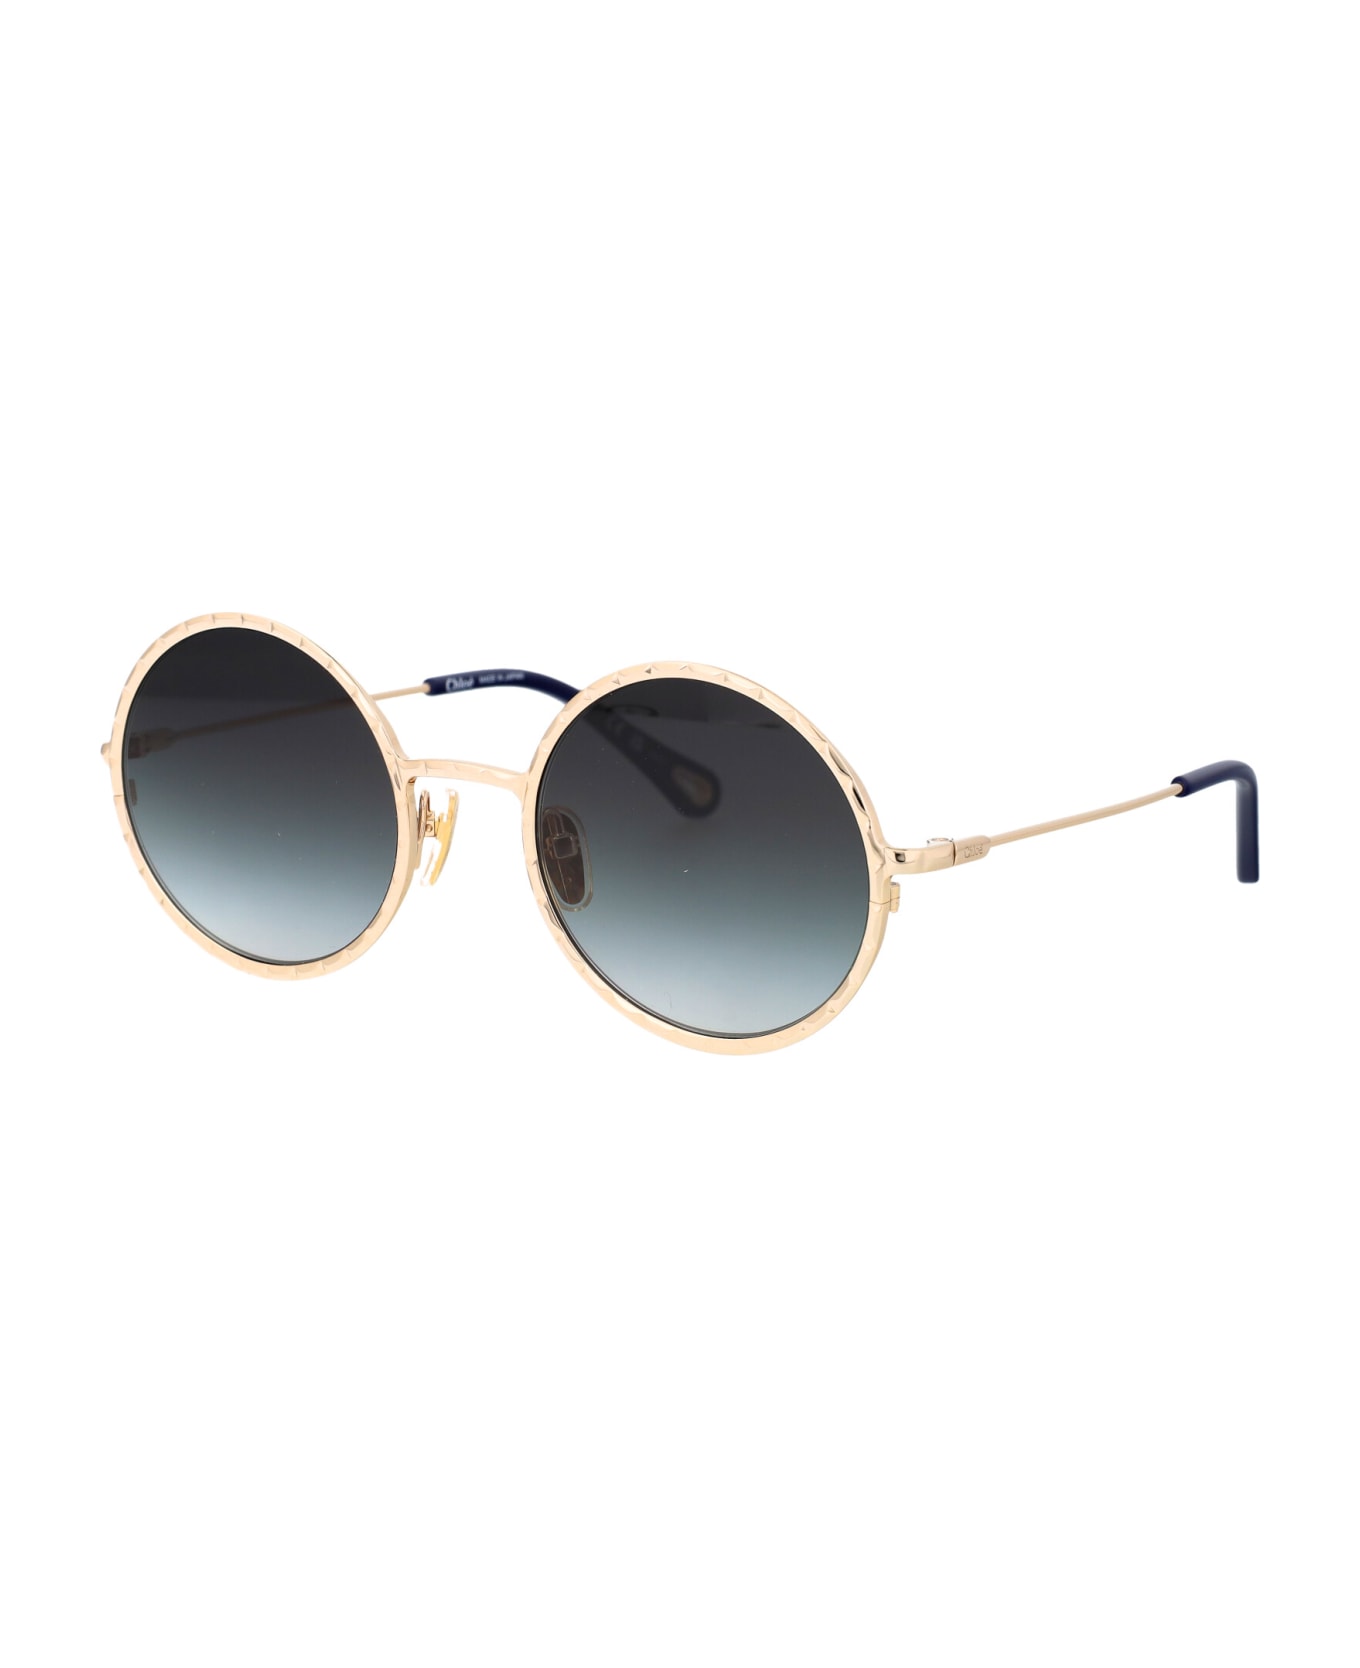 Chloé Eyewear Ch0230s Sunglasses - 004 GOLD GOLD GREY